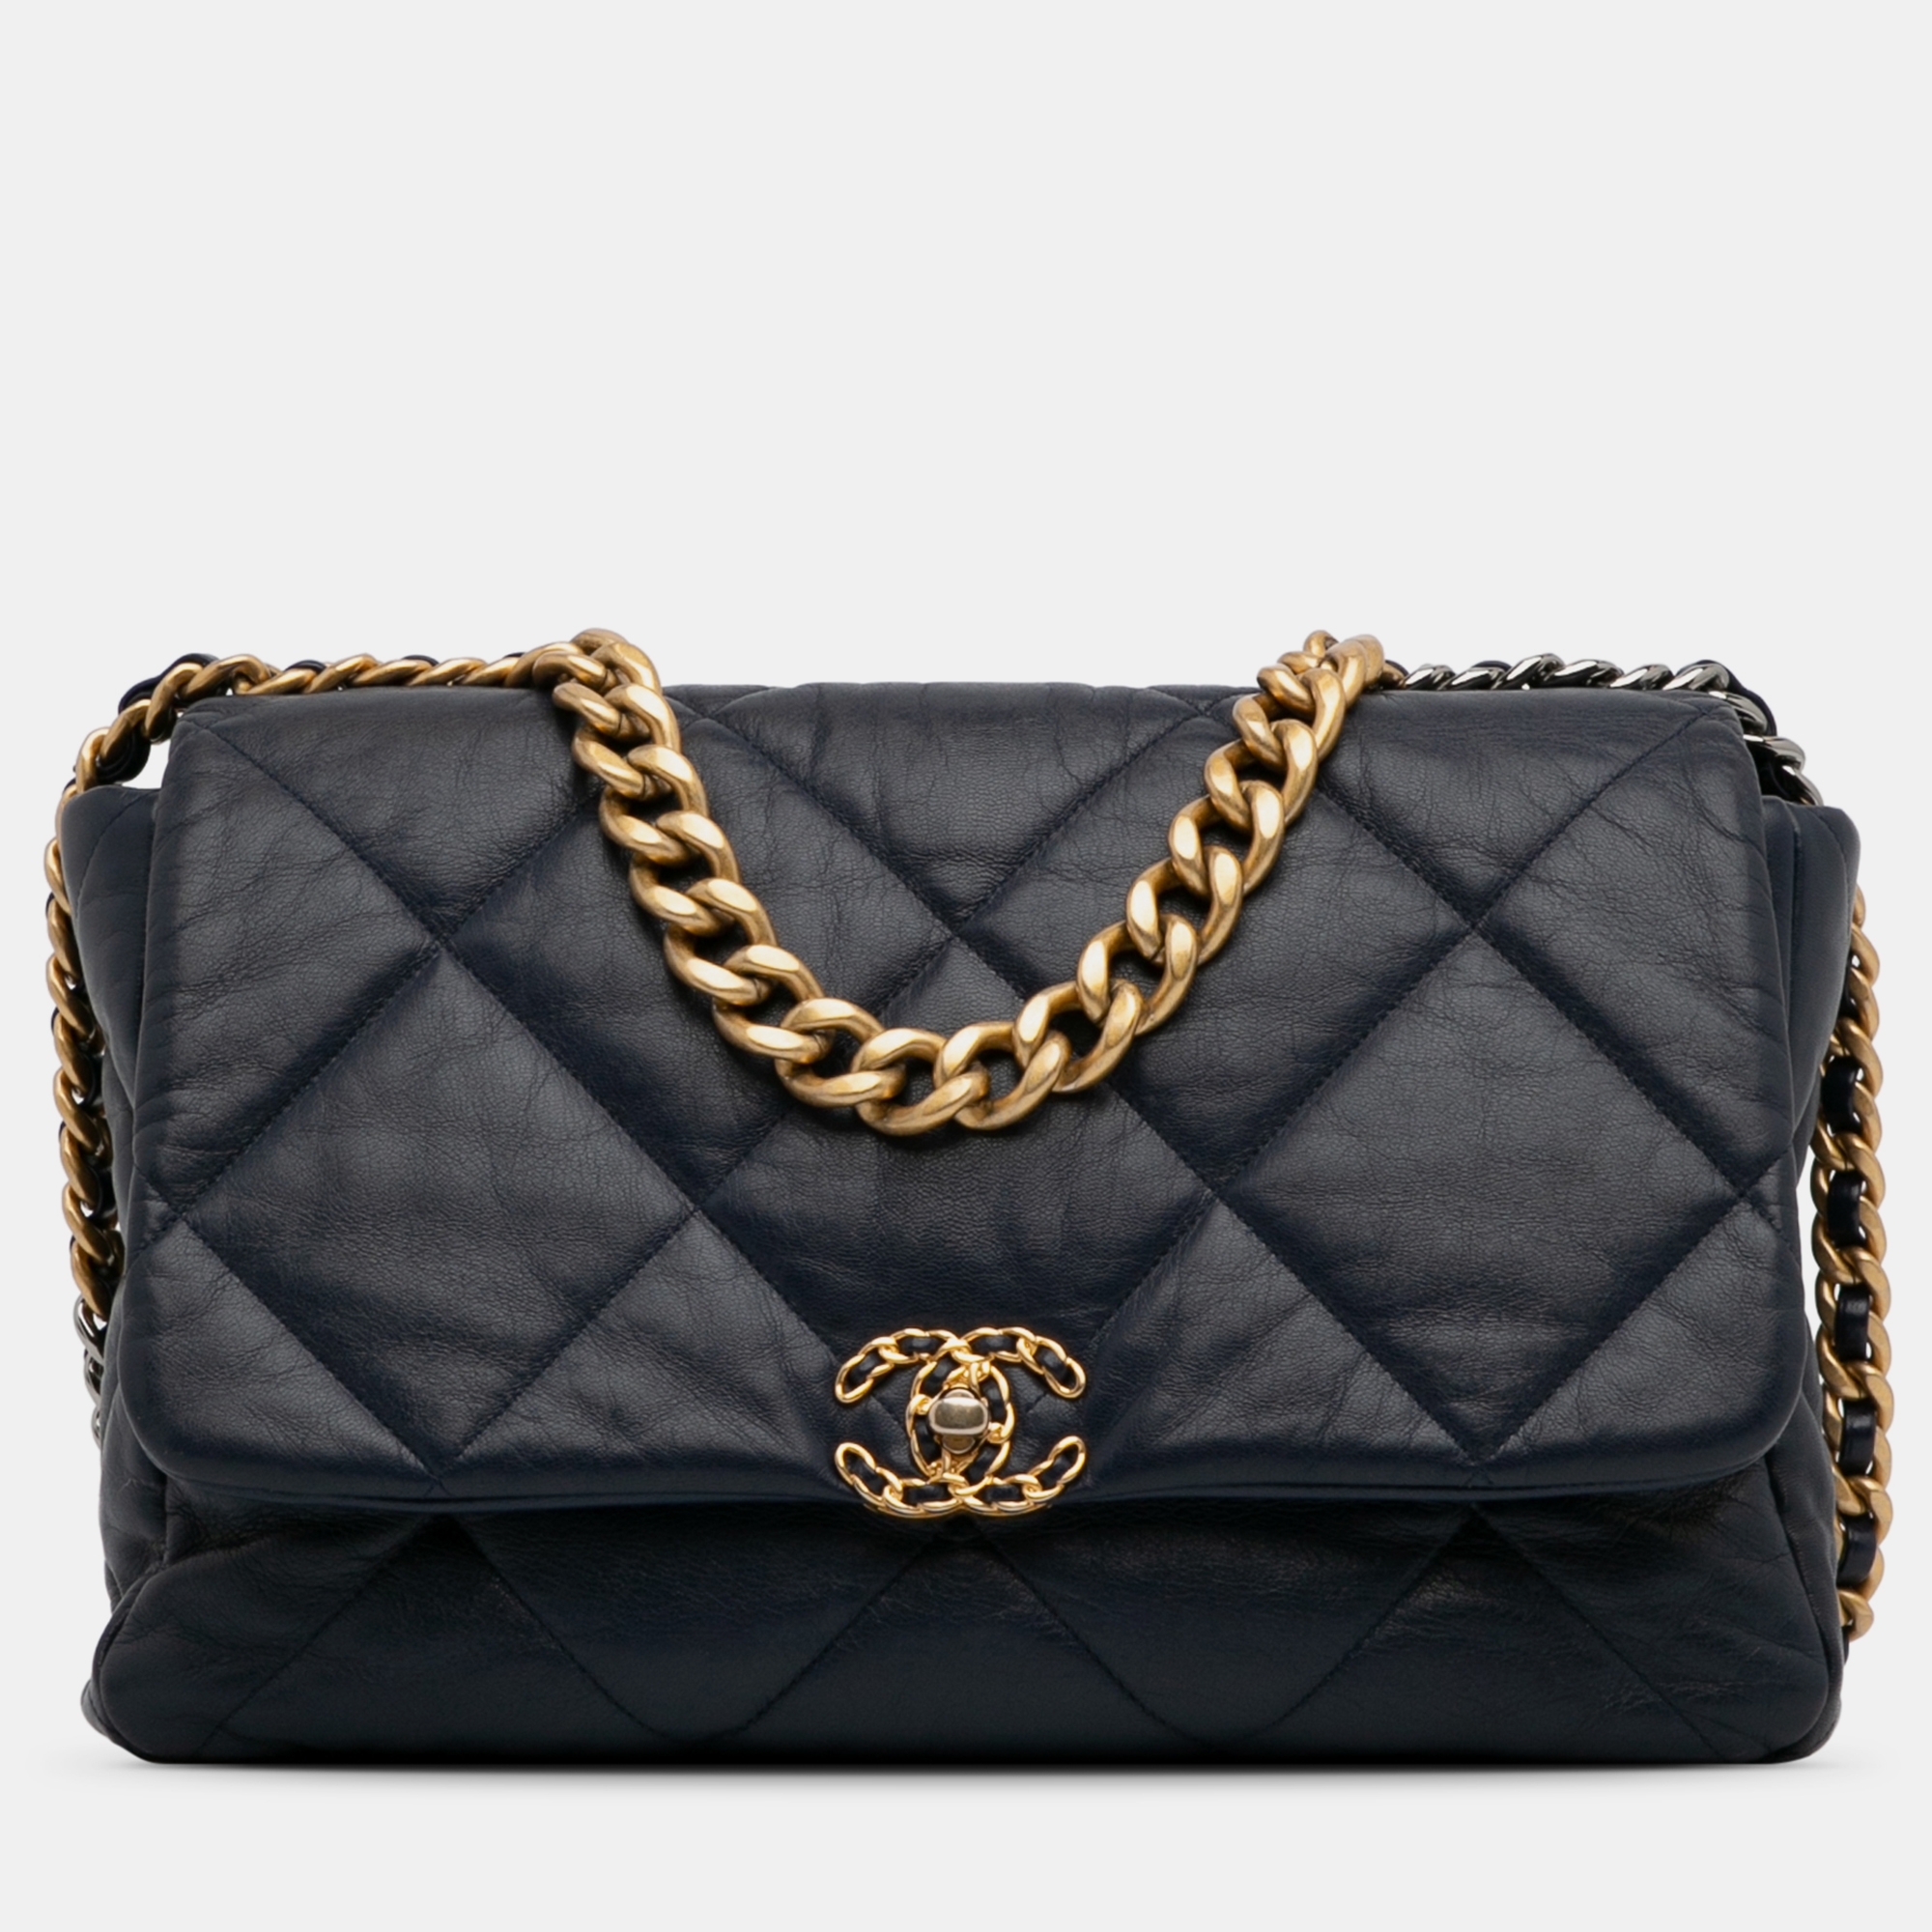 Chanel large 19 flap bag